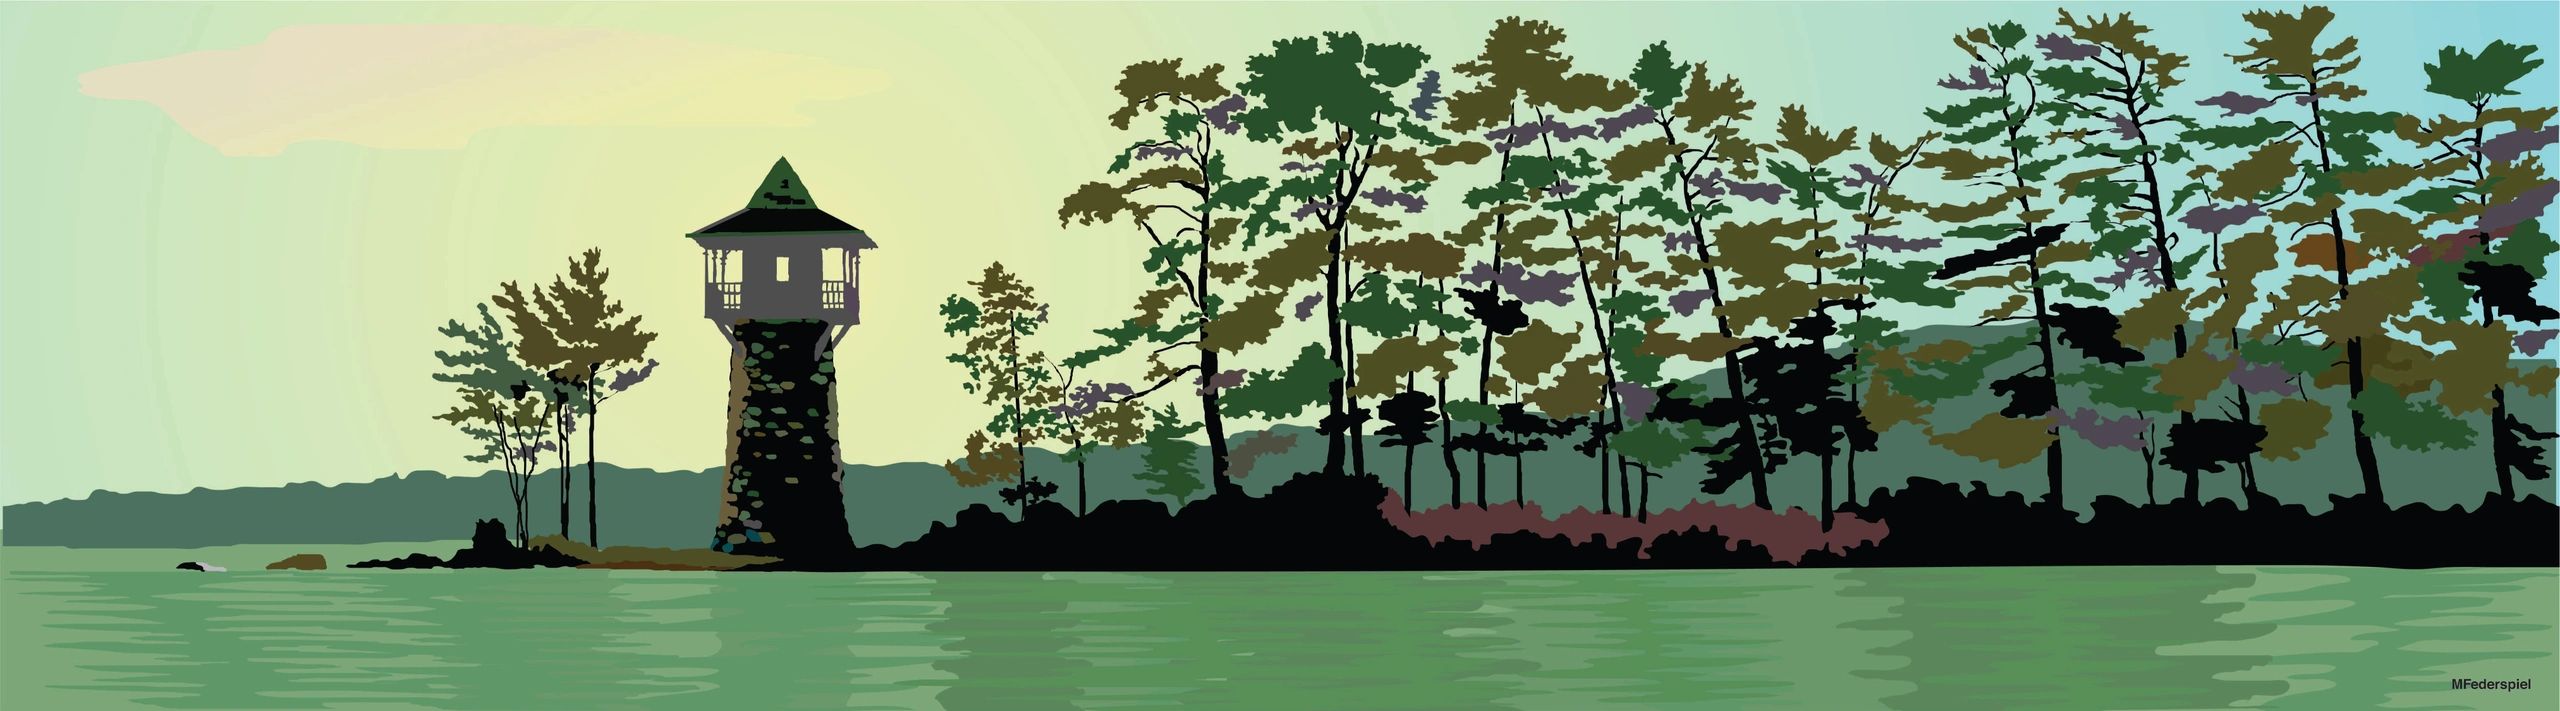 Spindle Point, Lake Winnipesaukee, Meredith, NH, USA by Marian Federspiel. Digital Drawing.